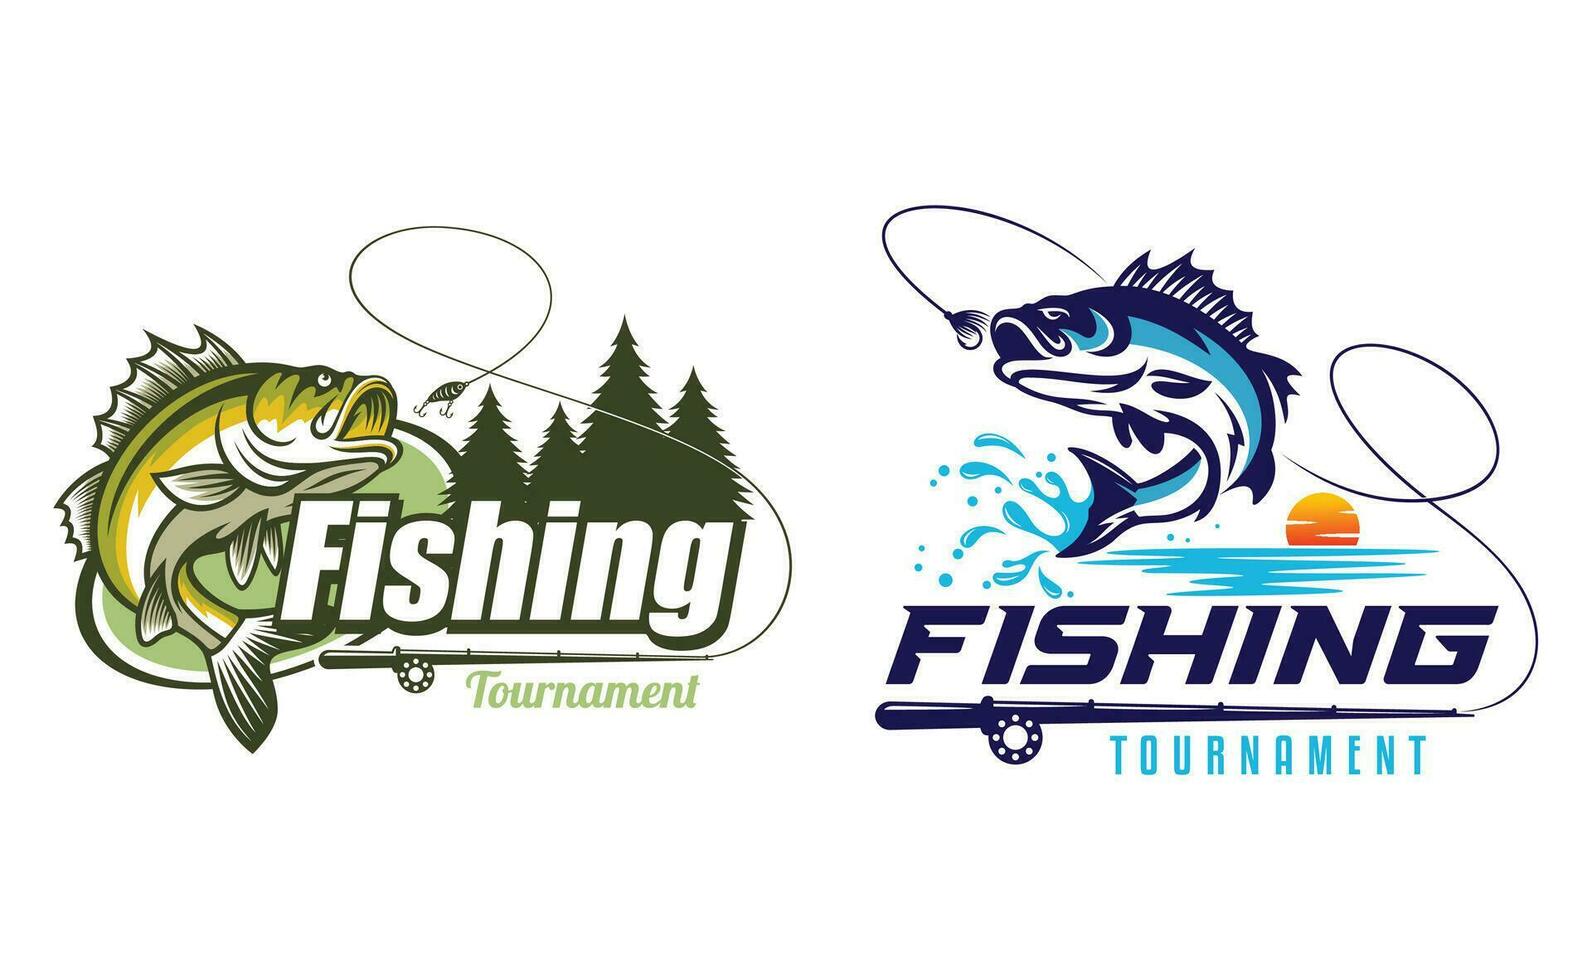 pescaria torneio logotipo desenhos vetor